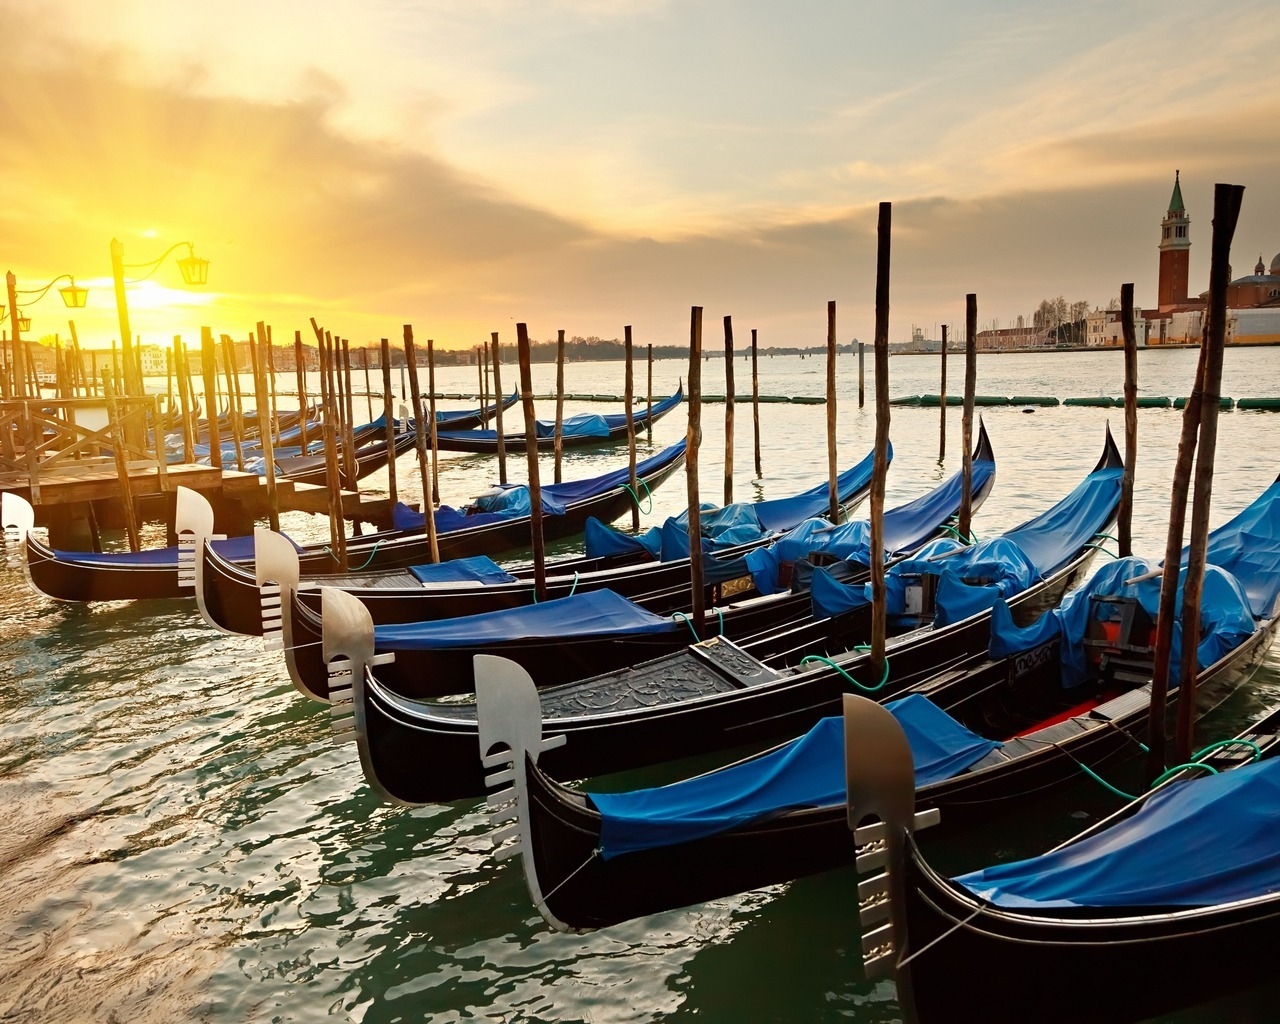 Venice Sunrise for 1280 x 1024 resolution